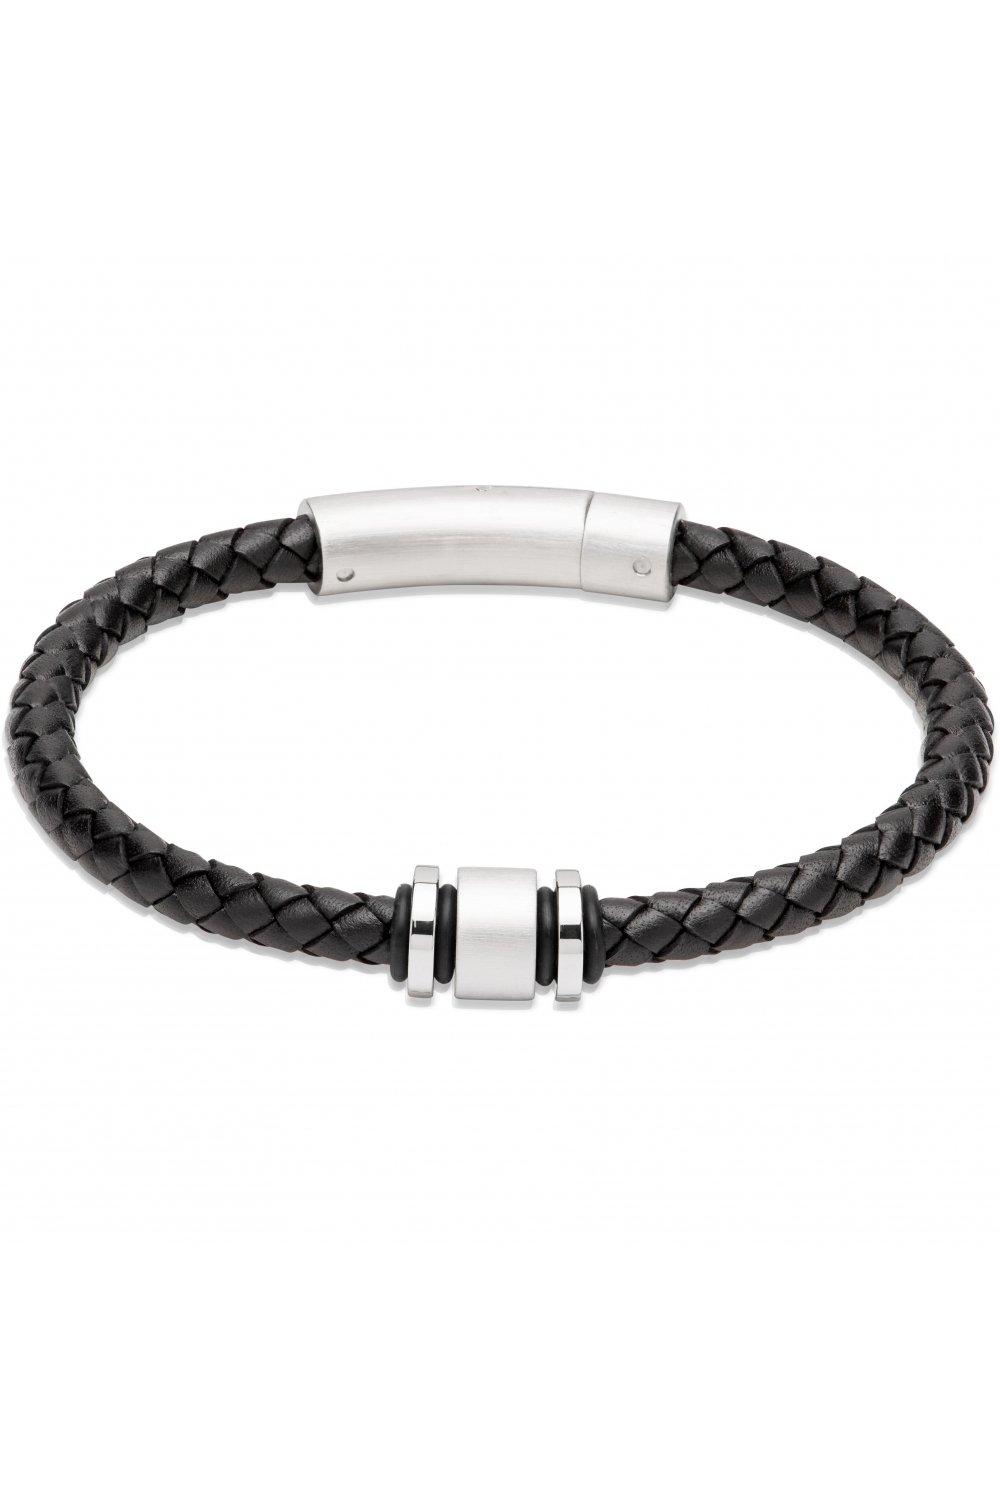 Jewellery | Stainless Steel Bracelet - B510Bl/21Cm | Unique & Co